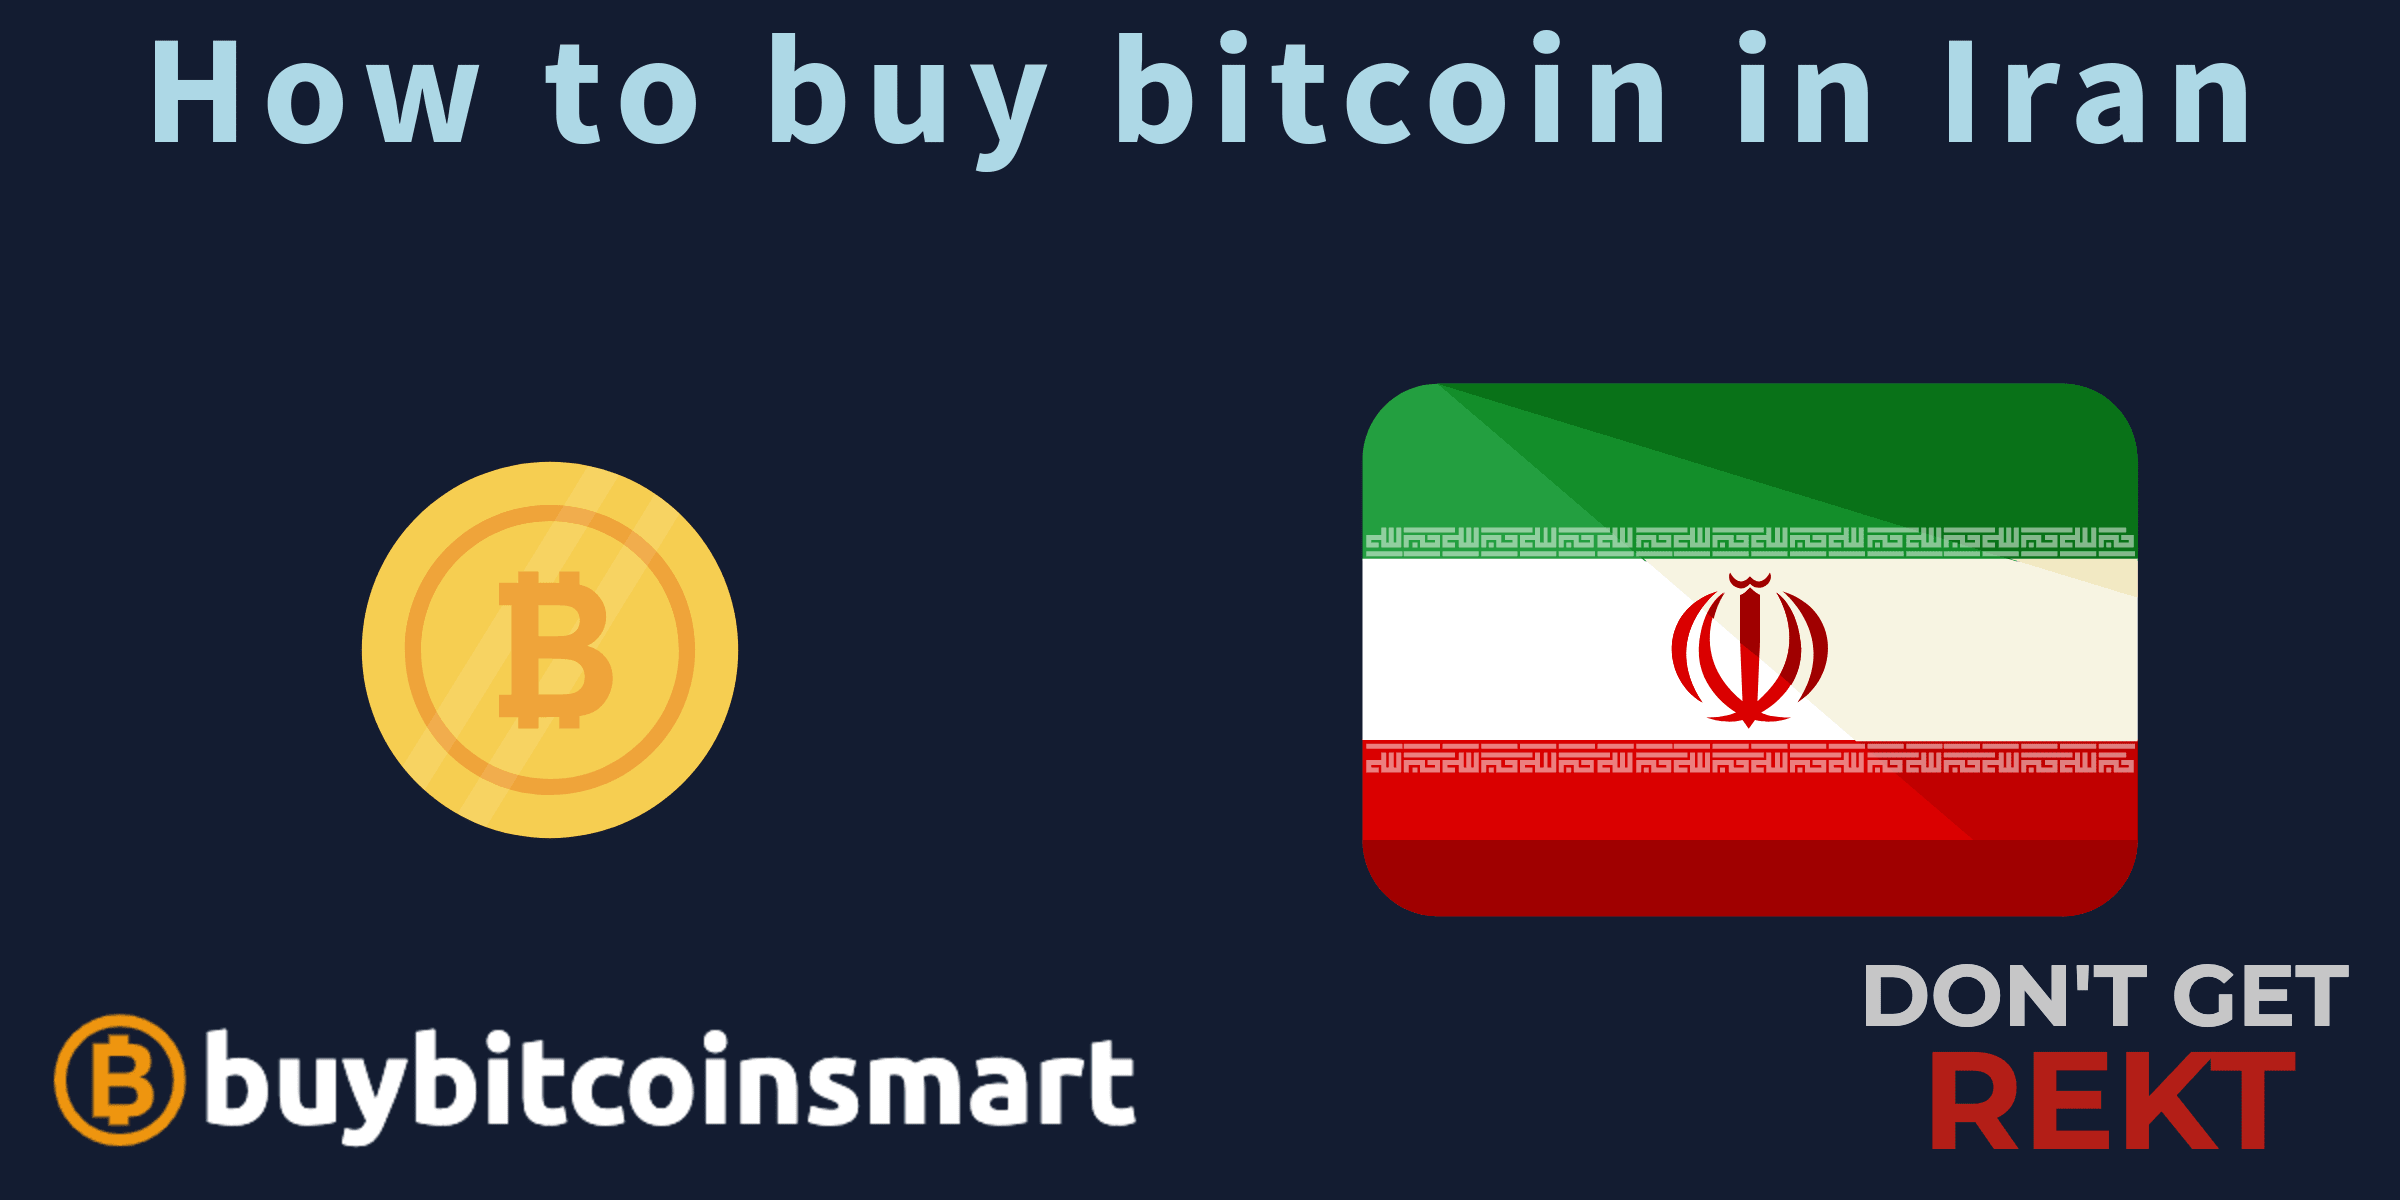 can you buy bitcoin in iran